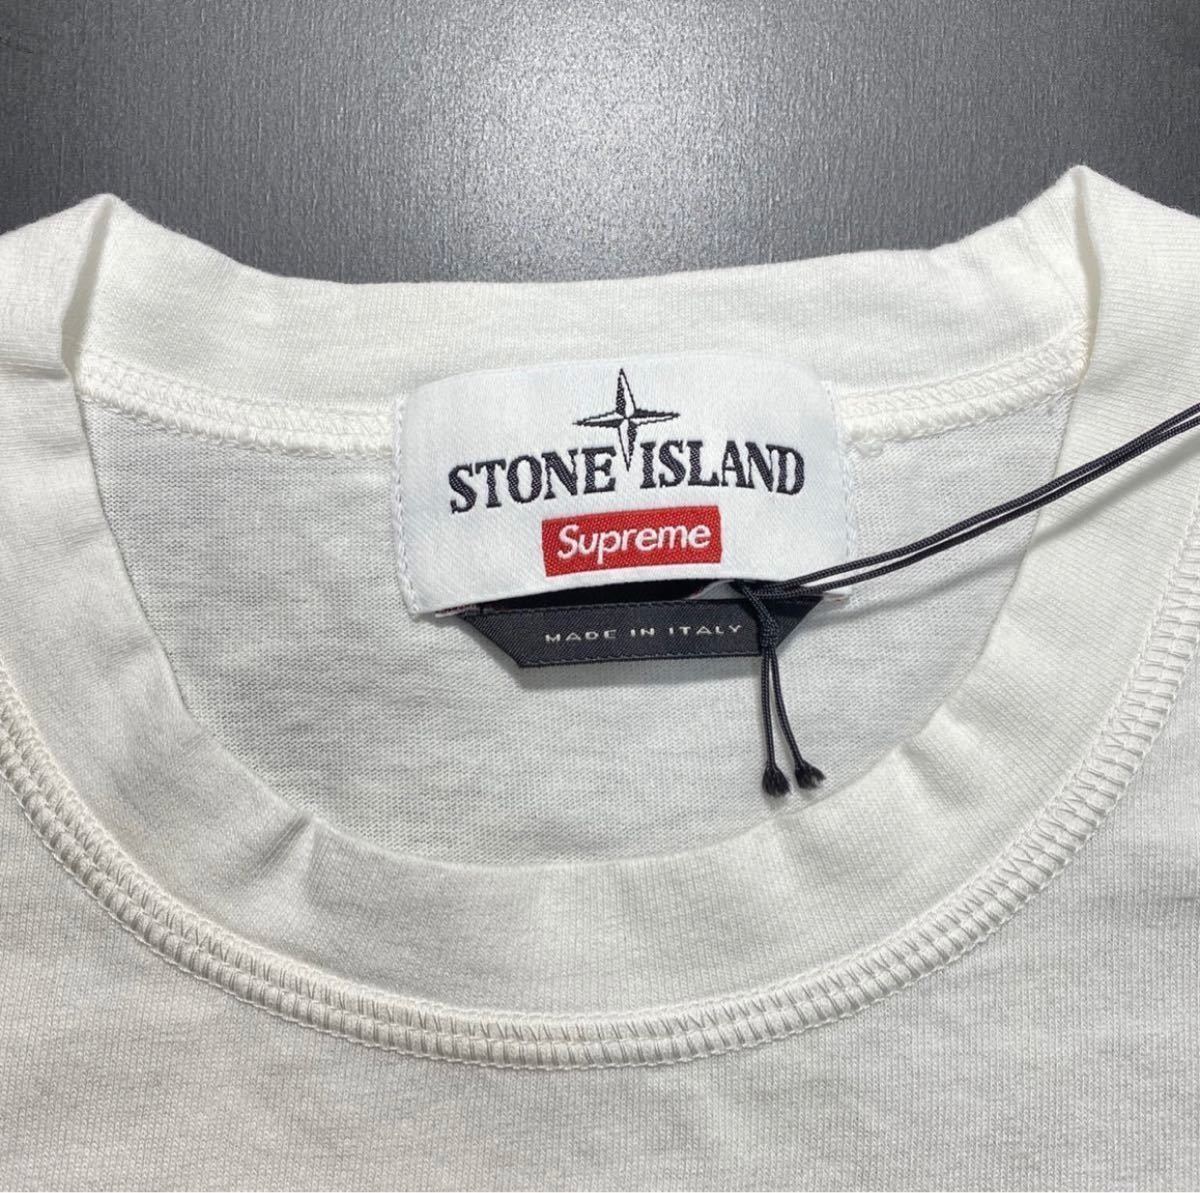 【S】新品 Supreme Stone Island Embroidered Logo S/S Top White シュプリーム ストーンアイランド エンブロイダード ロゴ ティーシャツ_画像6